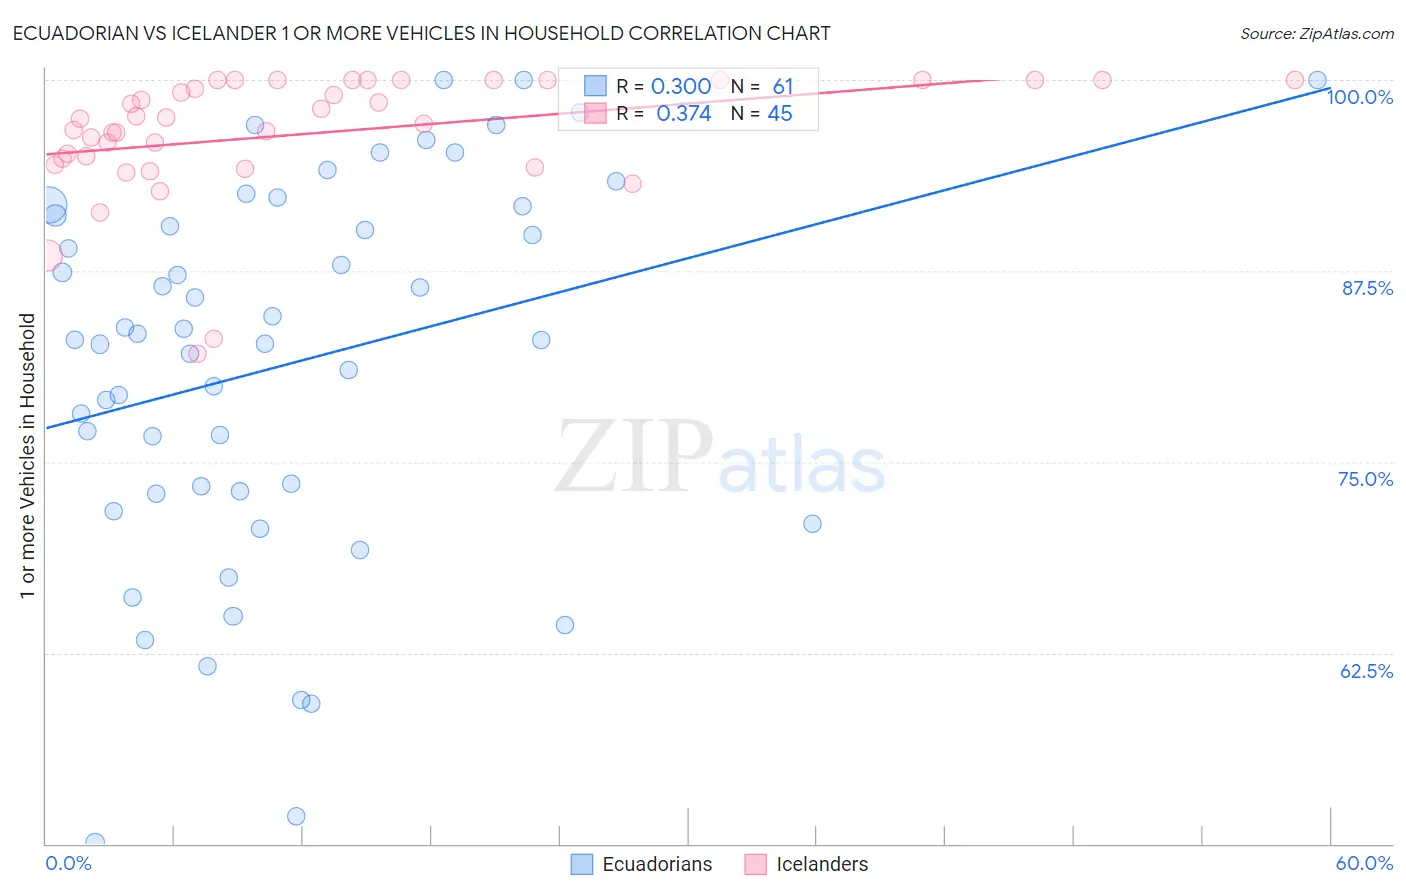 Ecuadorian vs Icelander 1 or more Vehicles in Household